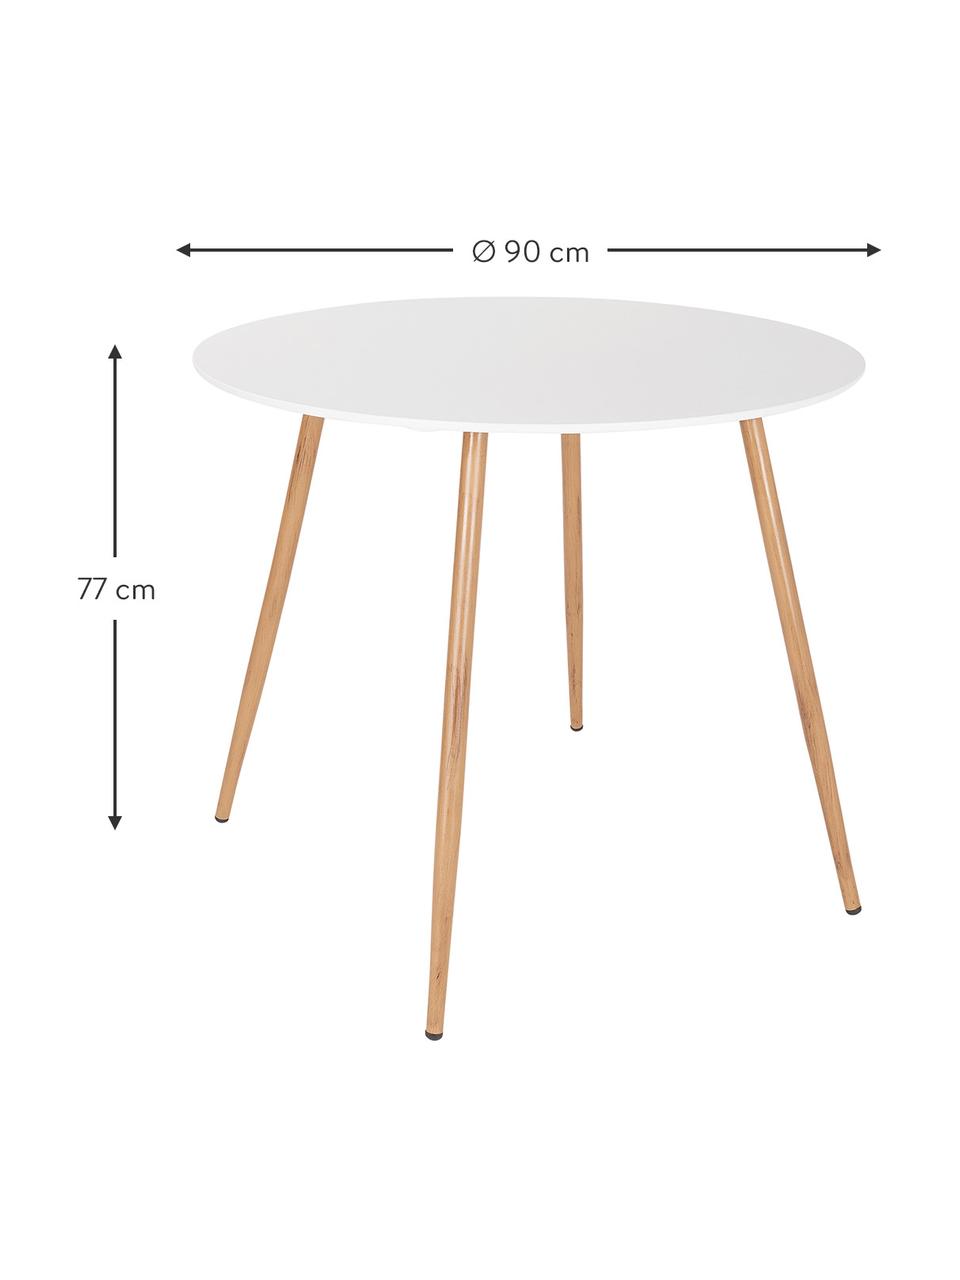 Runder Gartentisch Linea, Ø 90 cm, Tischplatte: Metall, beschichtet, Beine: Metall, beschichtet, Weiß, Hellbraun, Ø 90 cm x H 77 cm